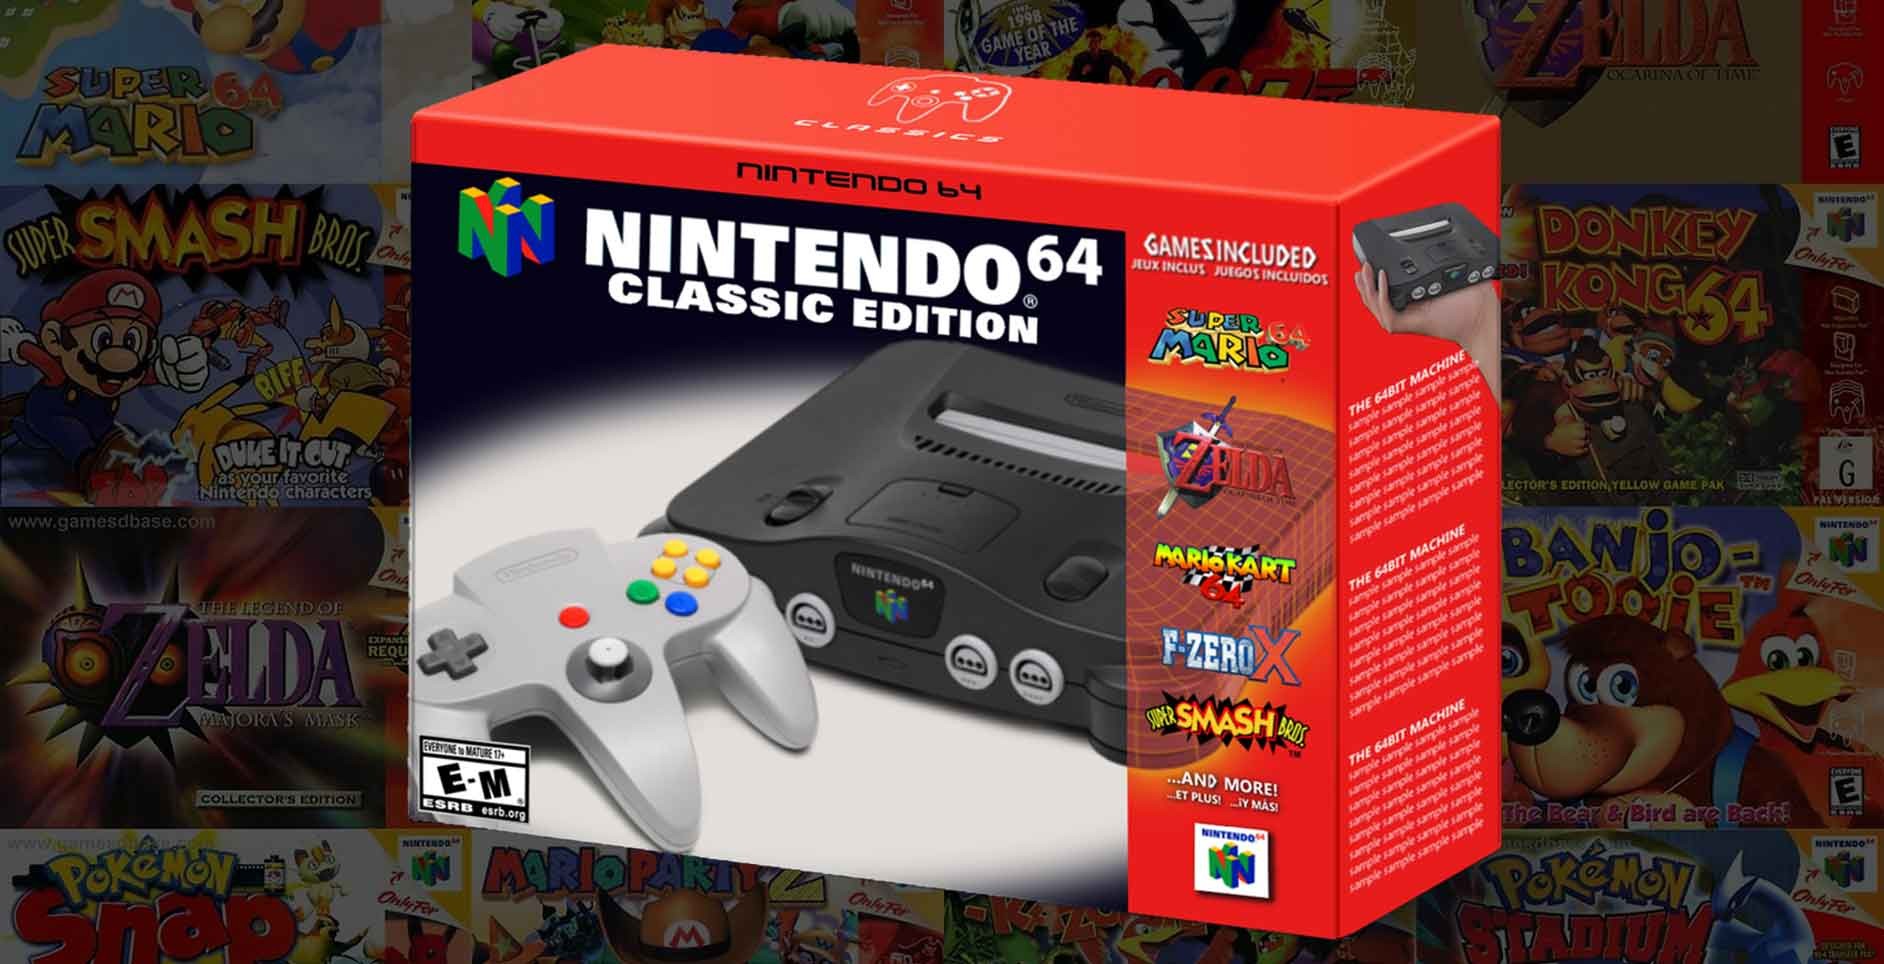 Nintendo 64 Classic Mini